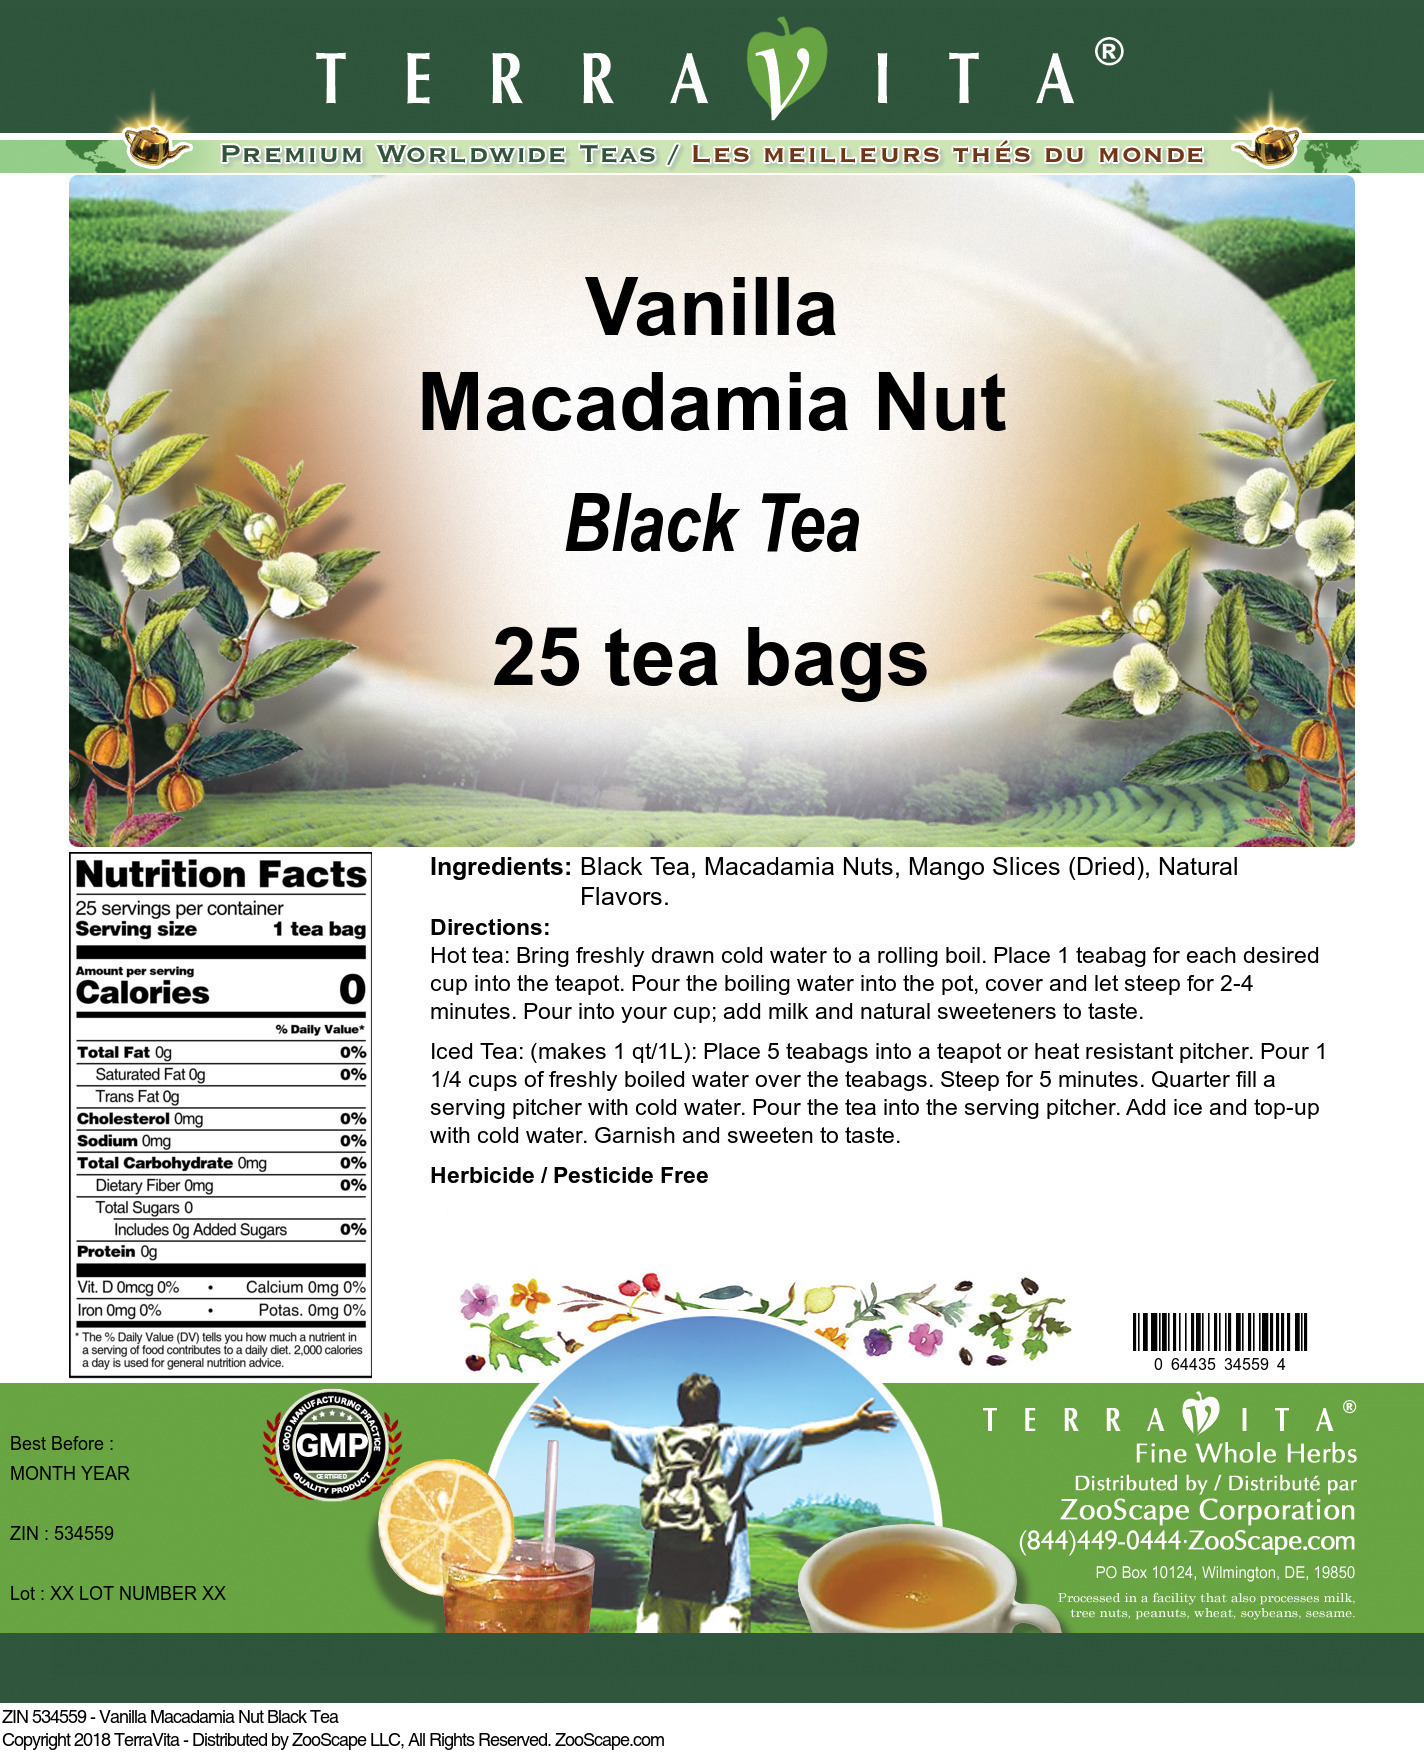 Vanilla Macadamia Nut Black Tea - Label